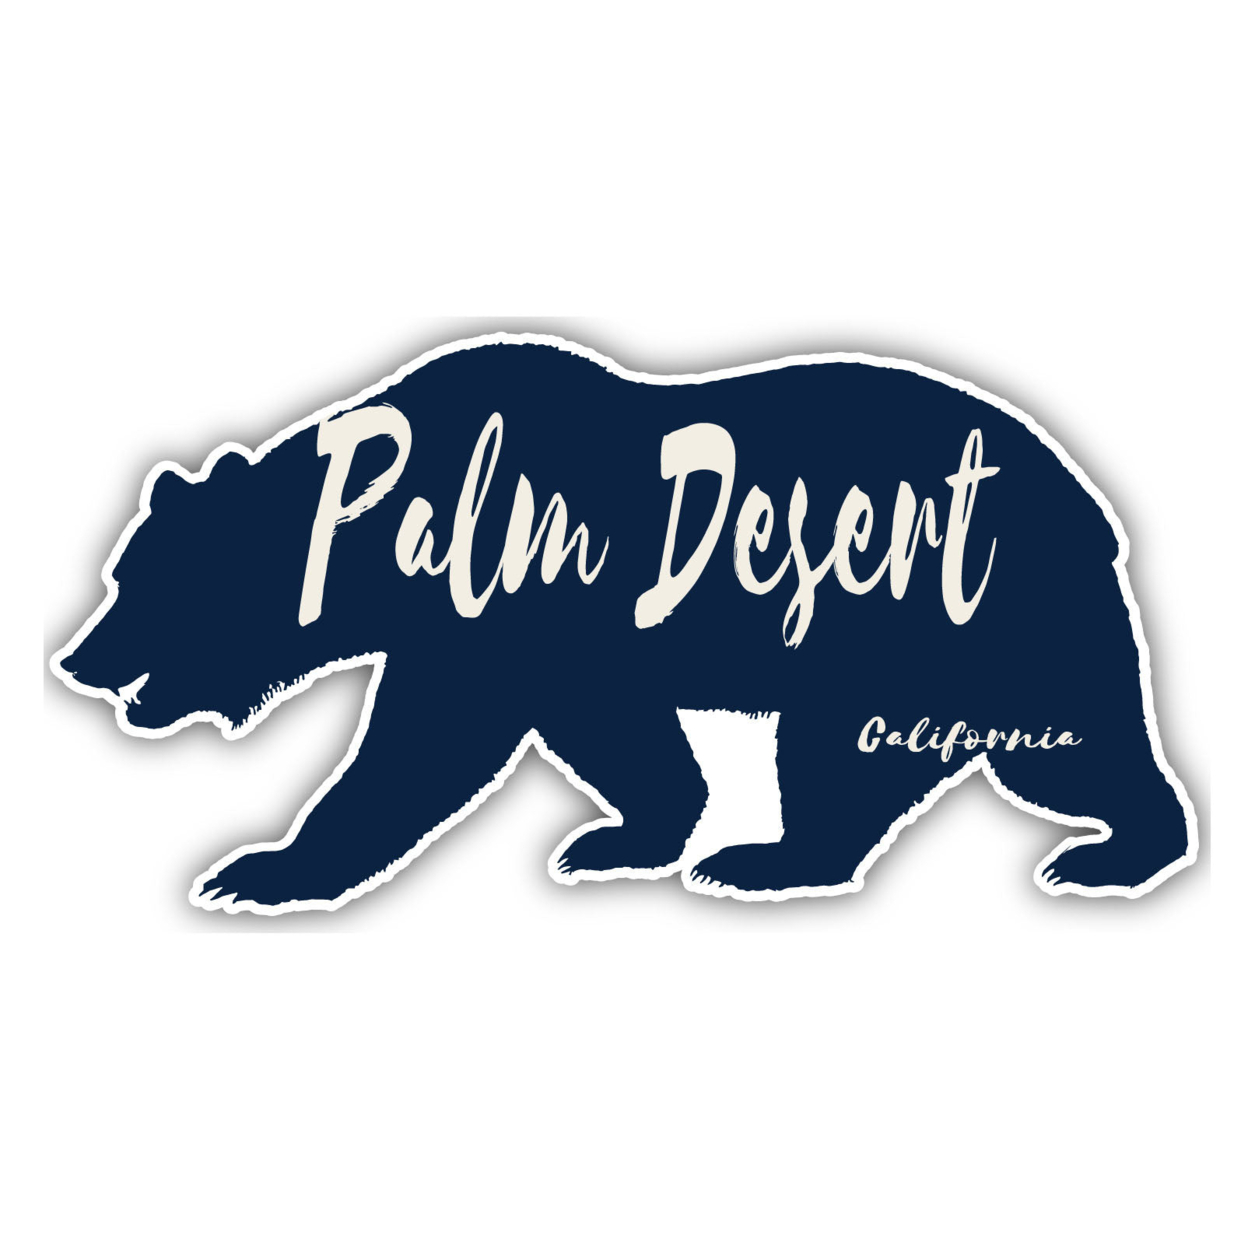 Palm Desert California Souvenir Decorative Stickers (Choose Theme And Size) - Single Unit, 4-Inch, Adventures Awaits